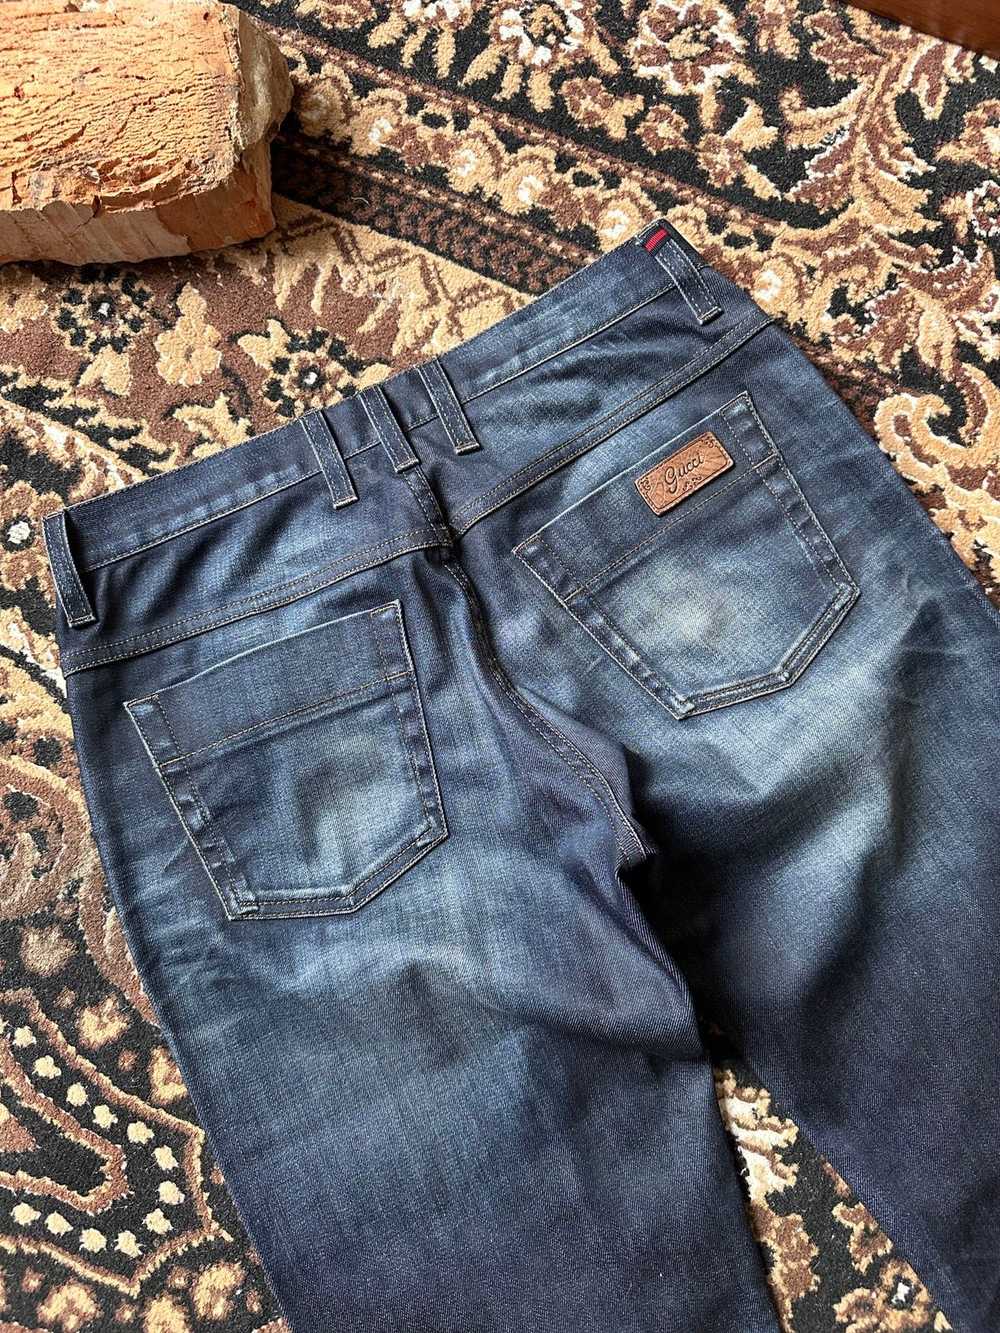 Gucci GUCCI denim LEATHER Logo Jeans Pants - image 5